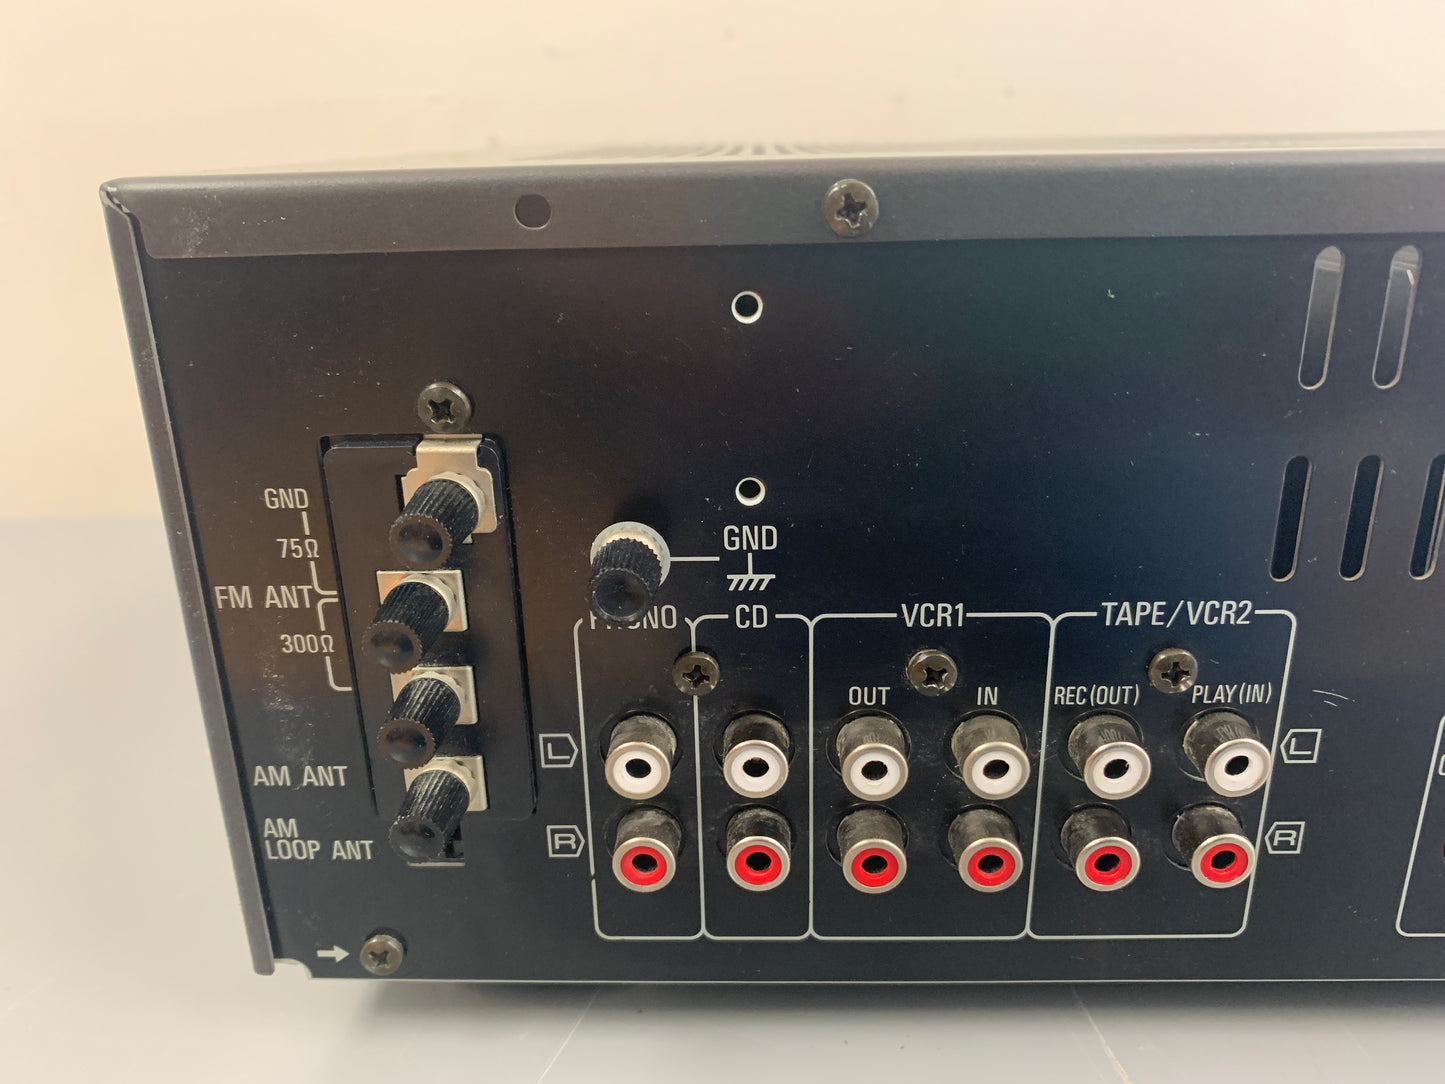 Technics SA-G9013 Stereo Receiver * 75W RMS